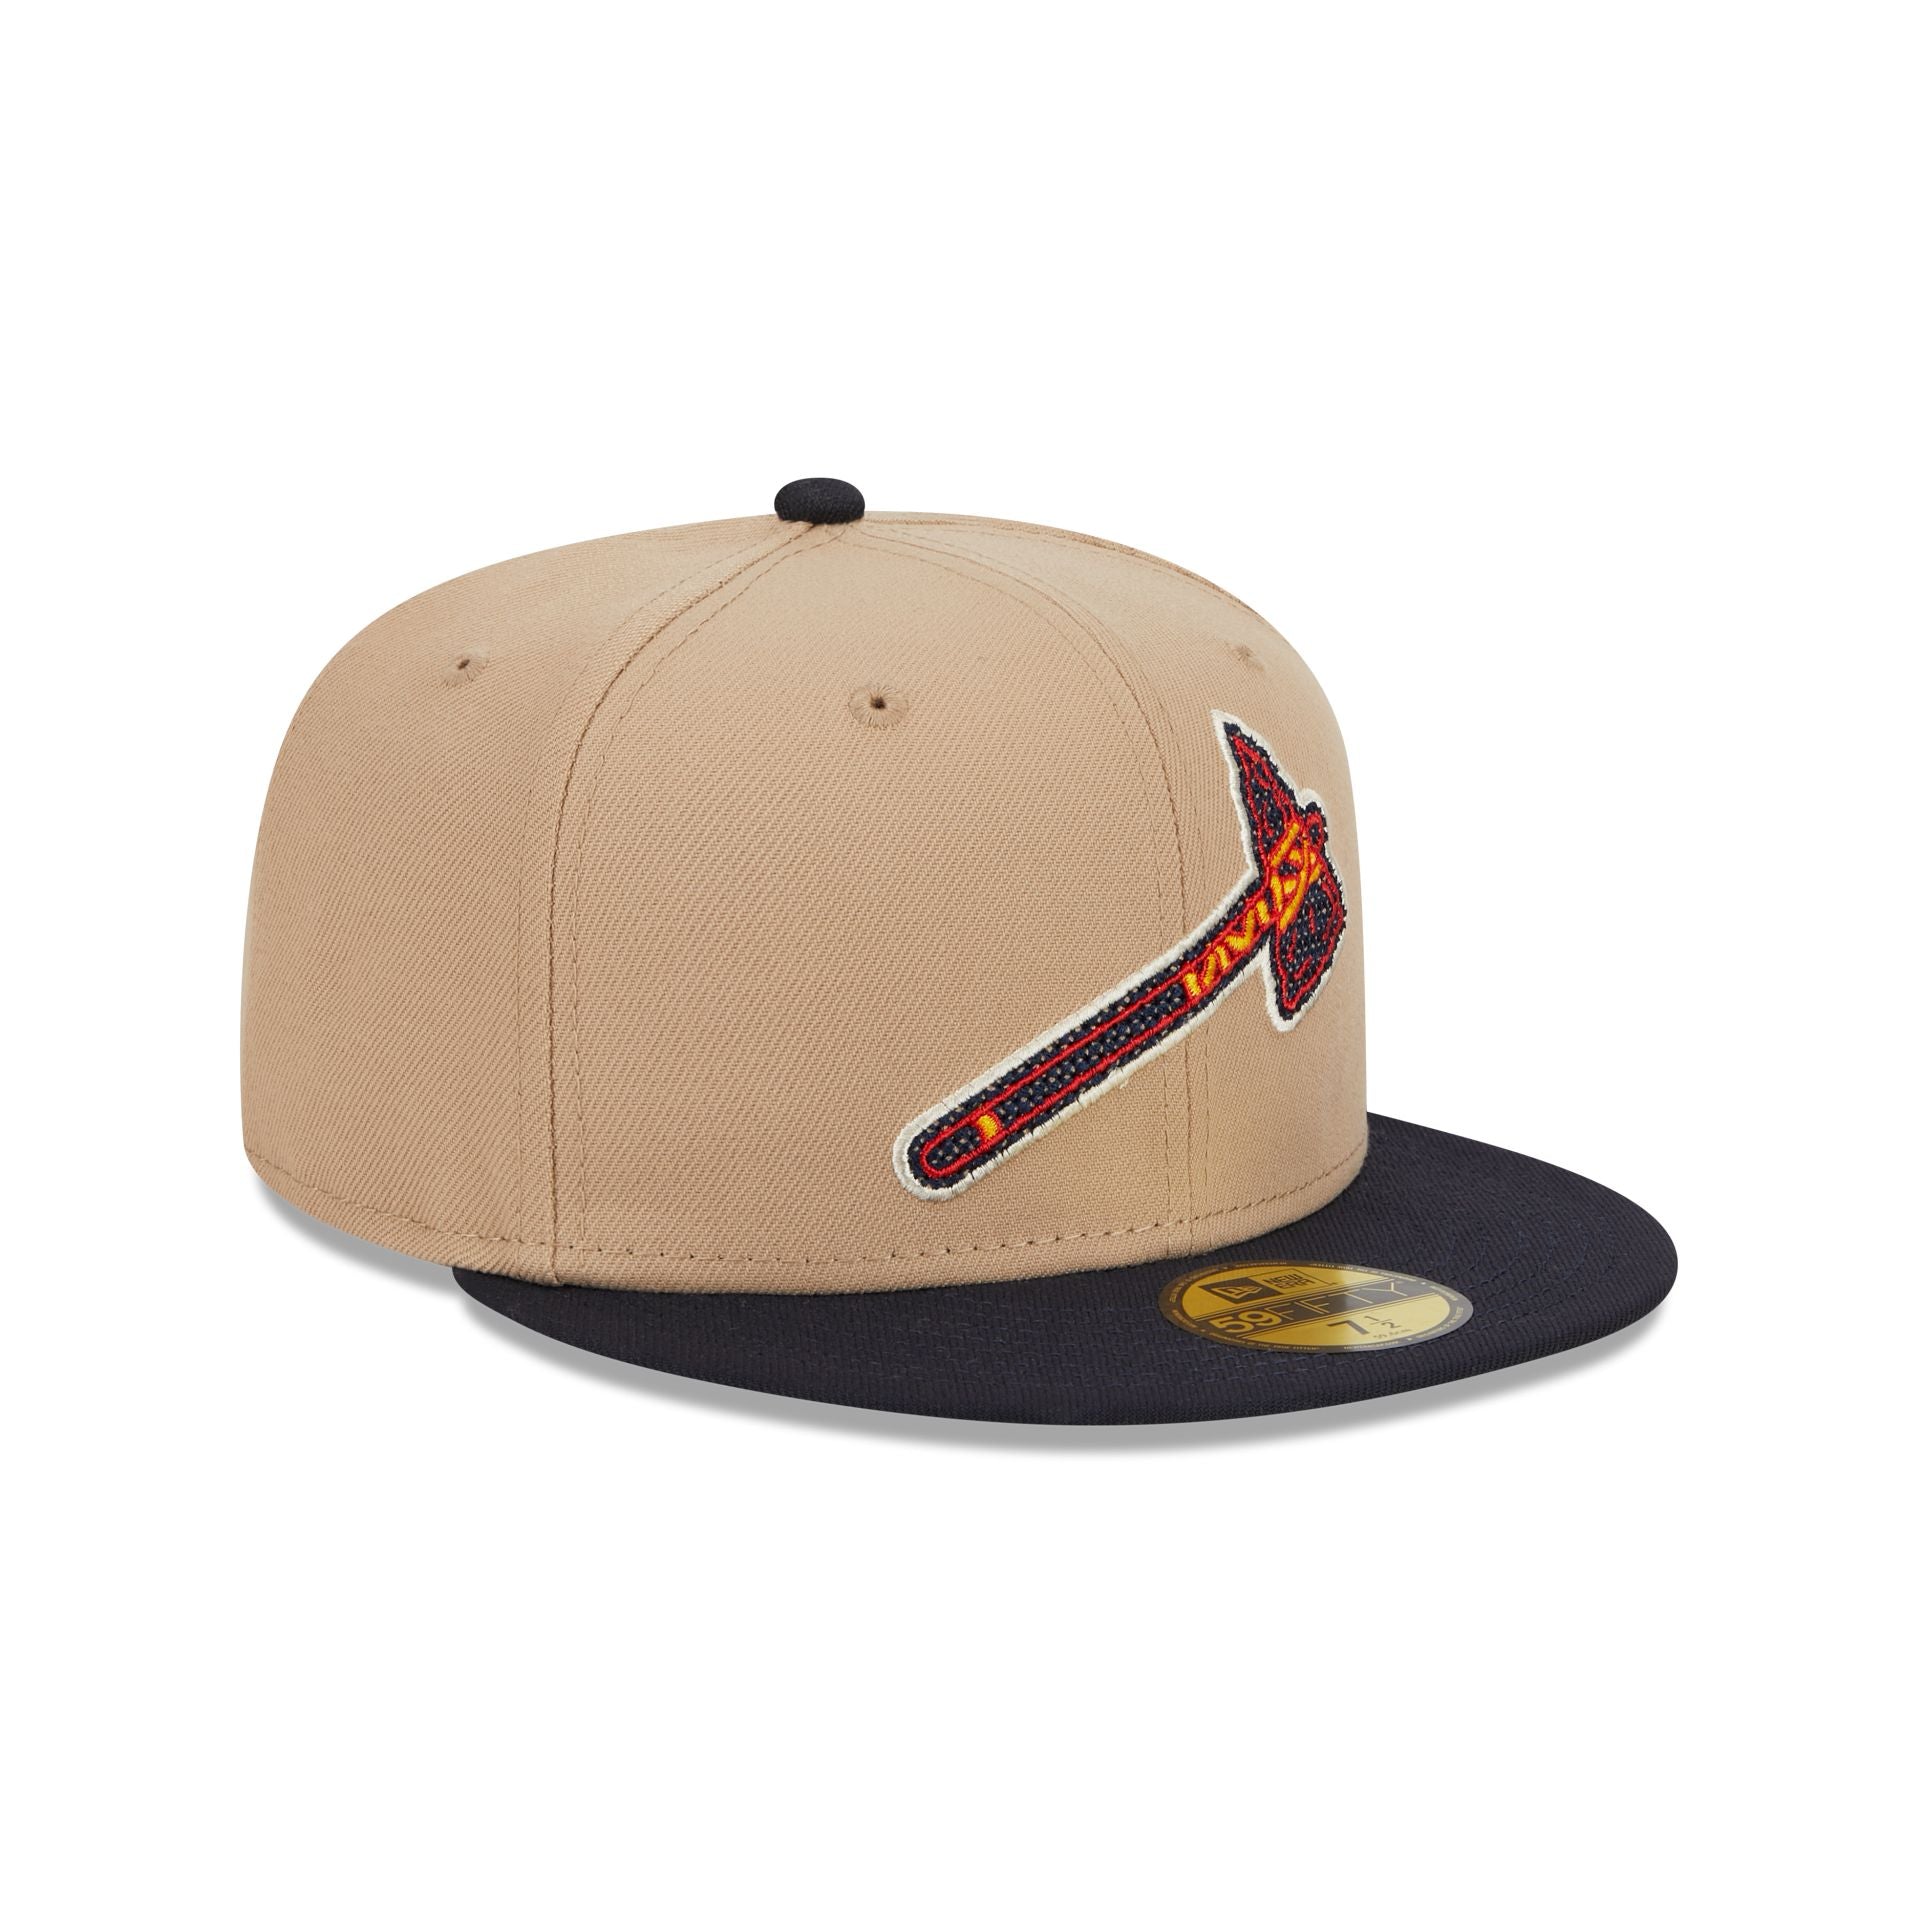 Atlanta Braves New Era 9FIFTY Tomahawk Axe Adjustable Snapback Hat Cap  2Tone 950